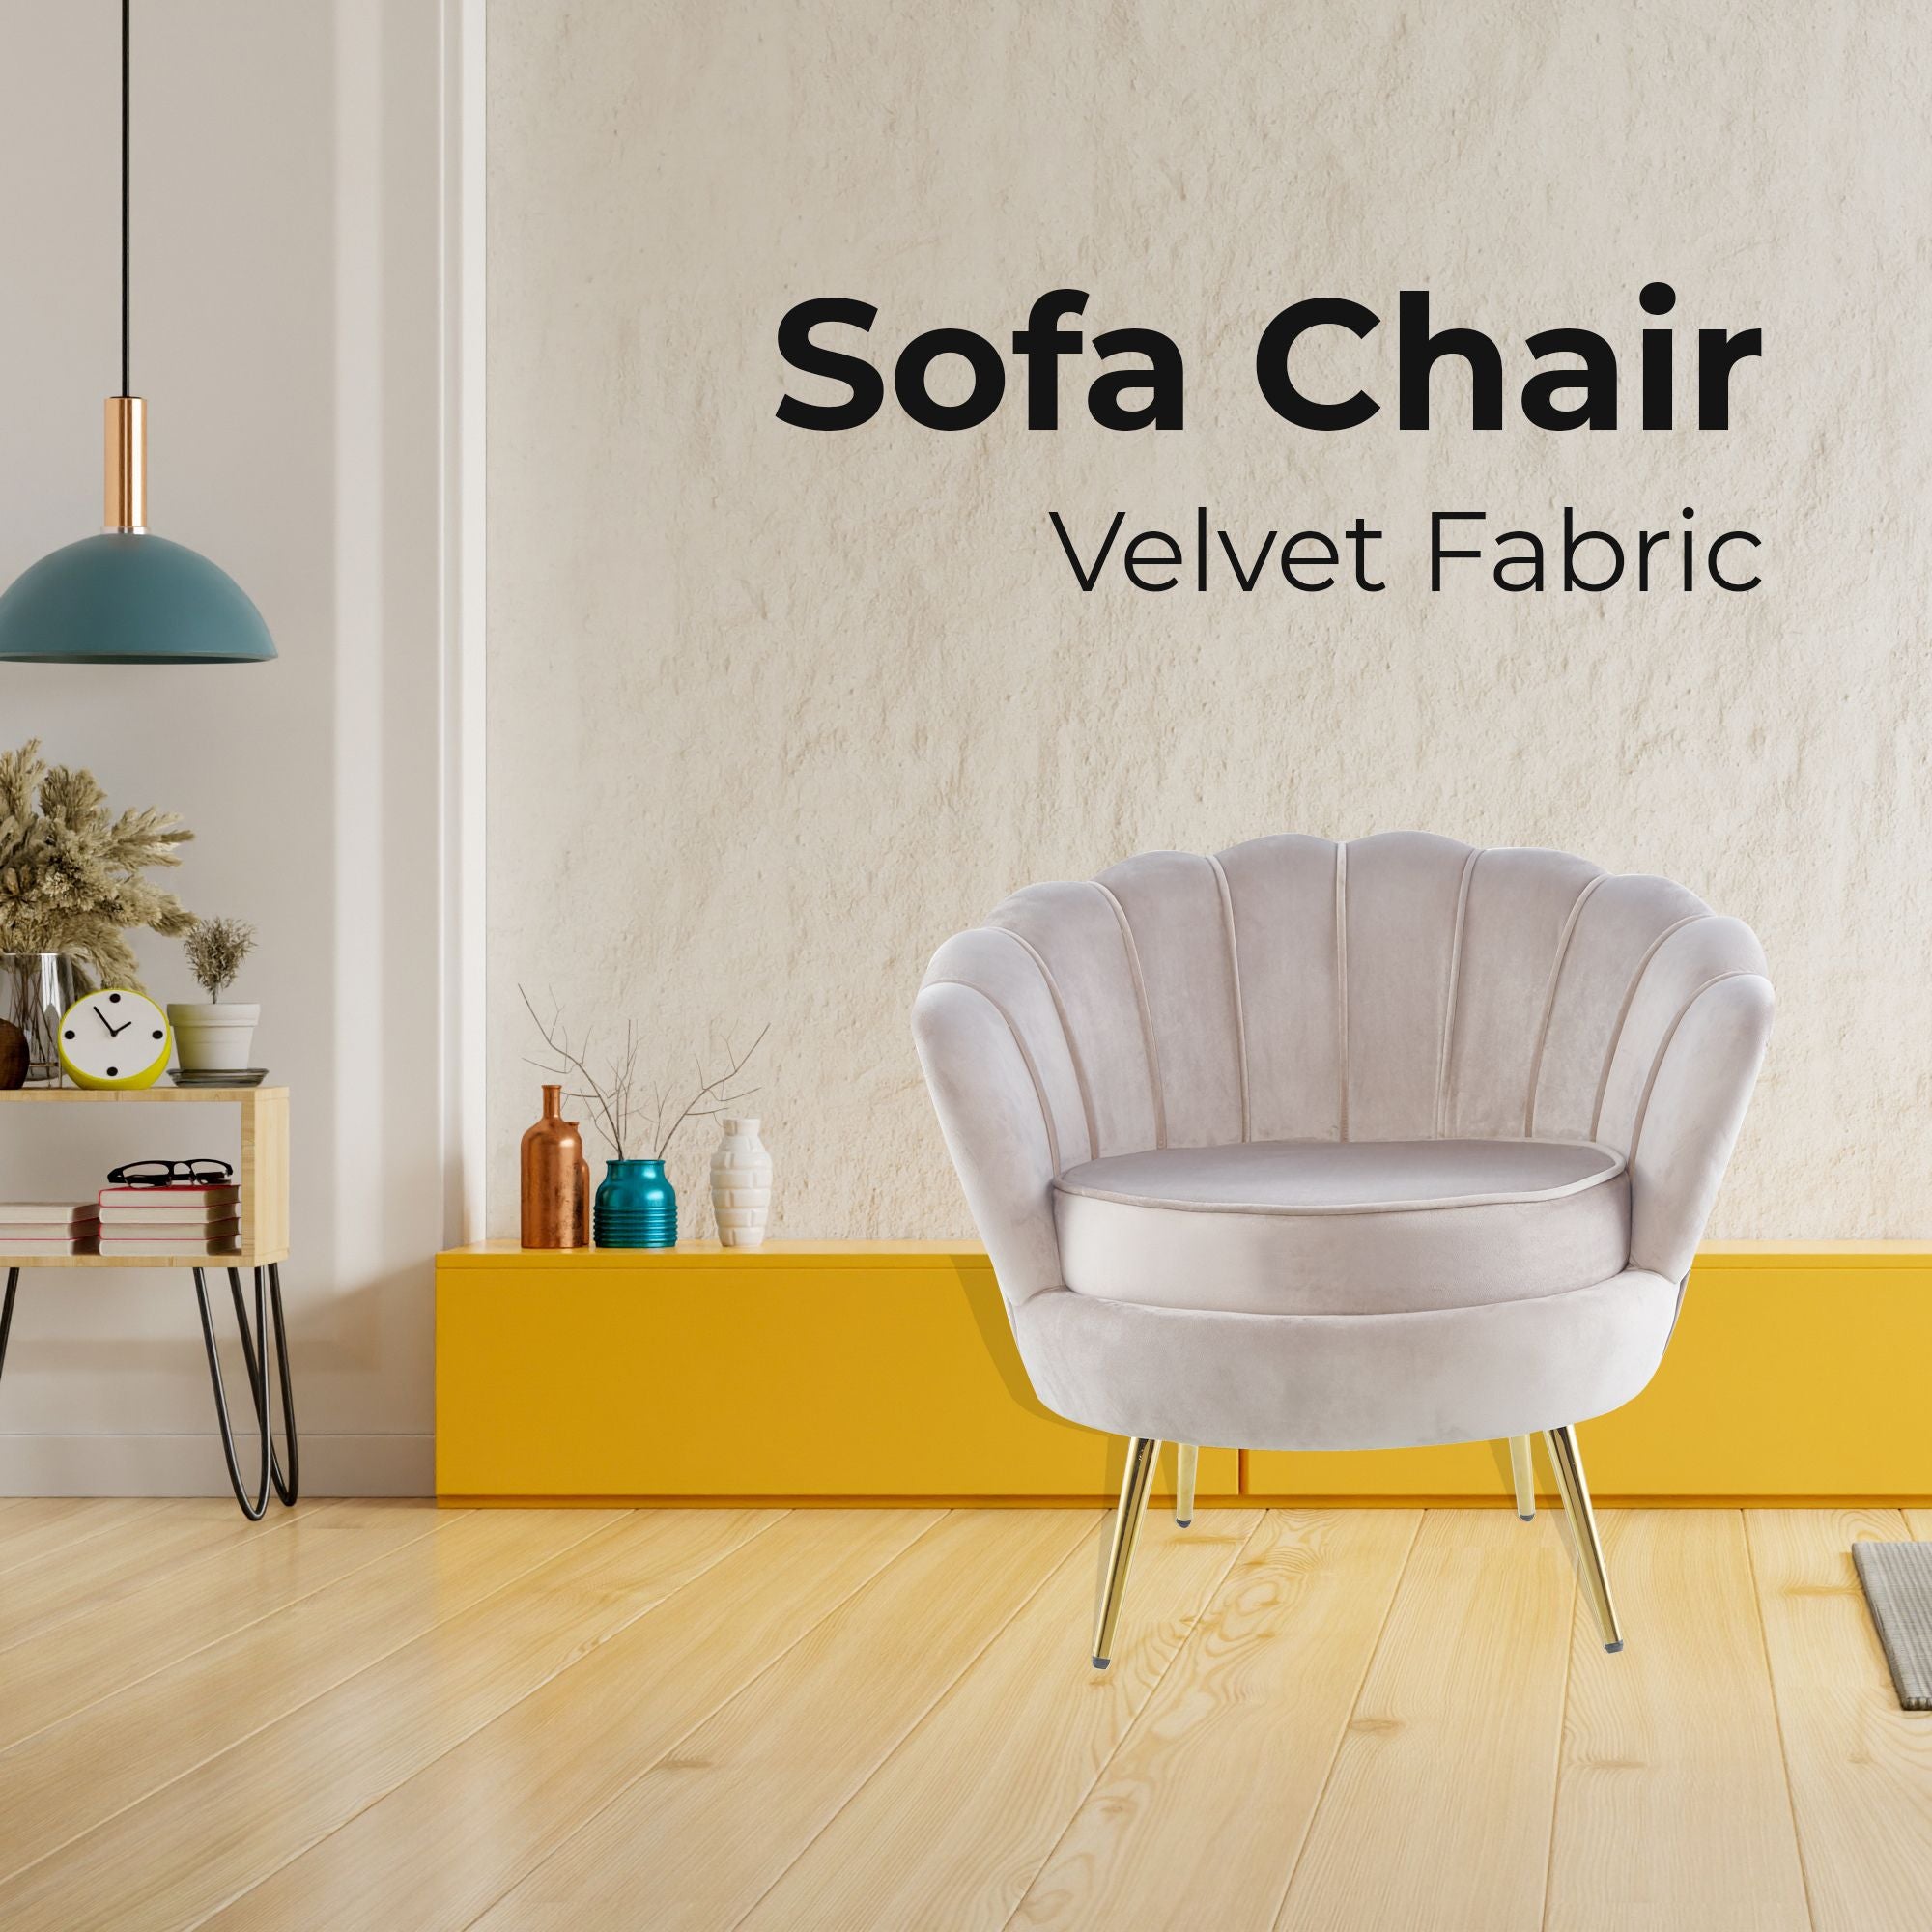 Bloomer Velvet Fabric Accent Sofa Love Chair Round Ottoman Set - Beige.